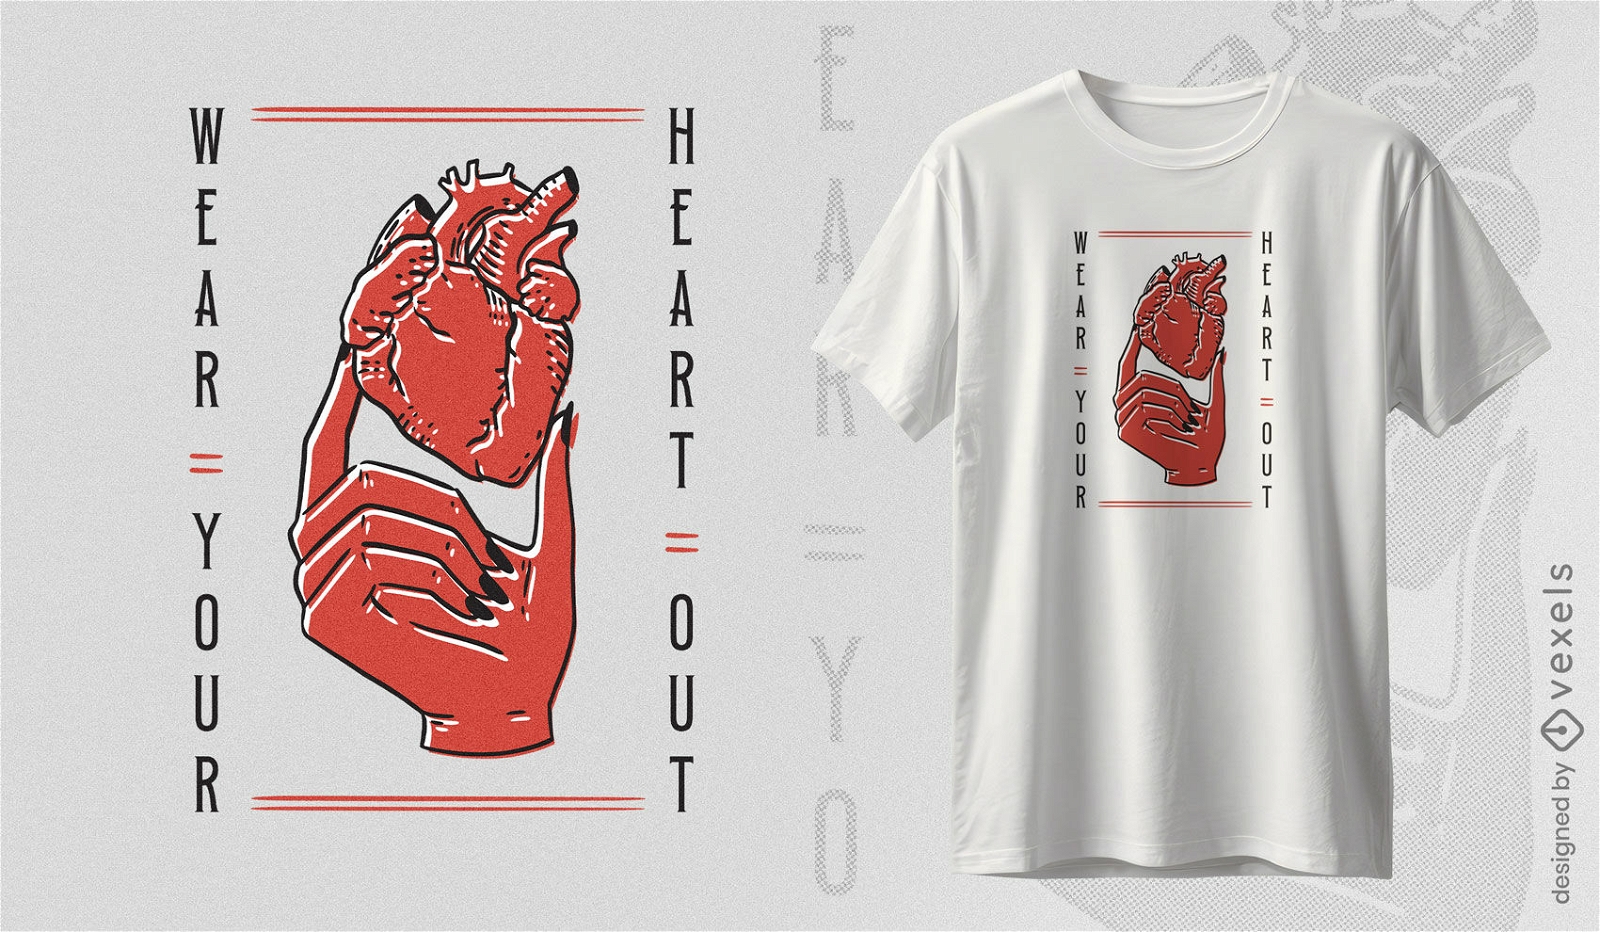 Wear your heart out t-shirt design